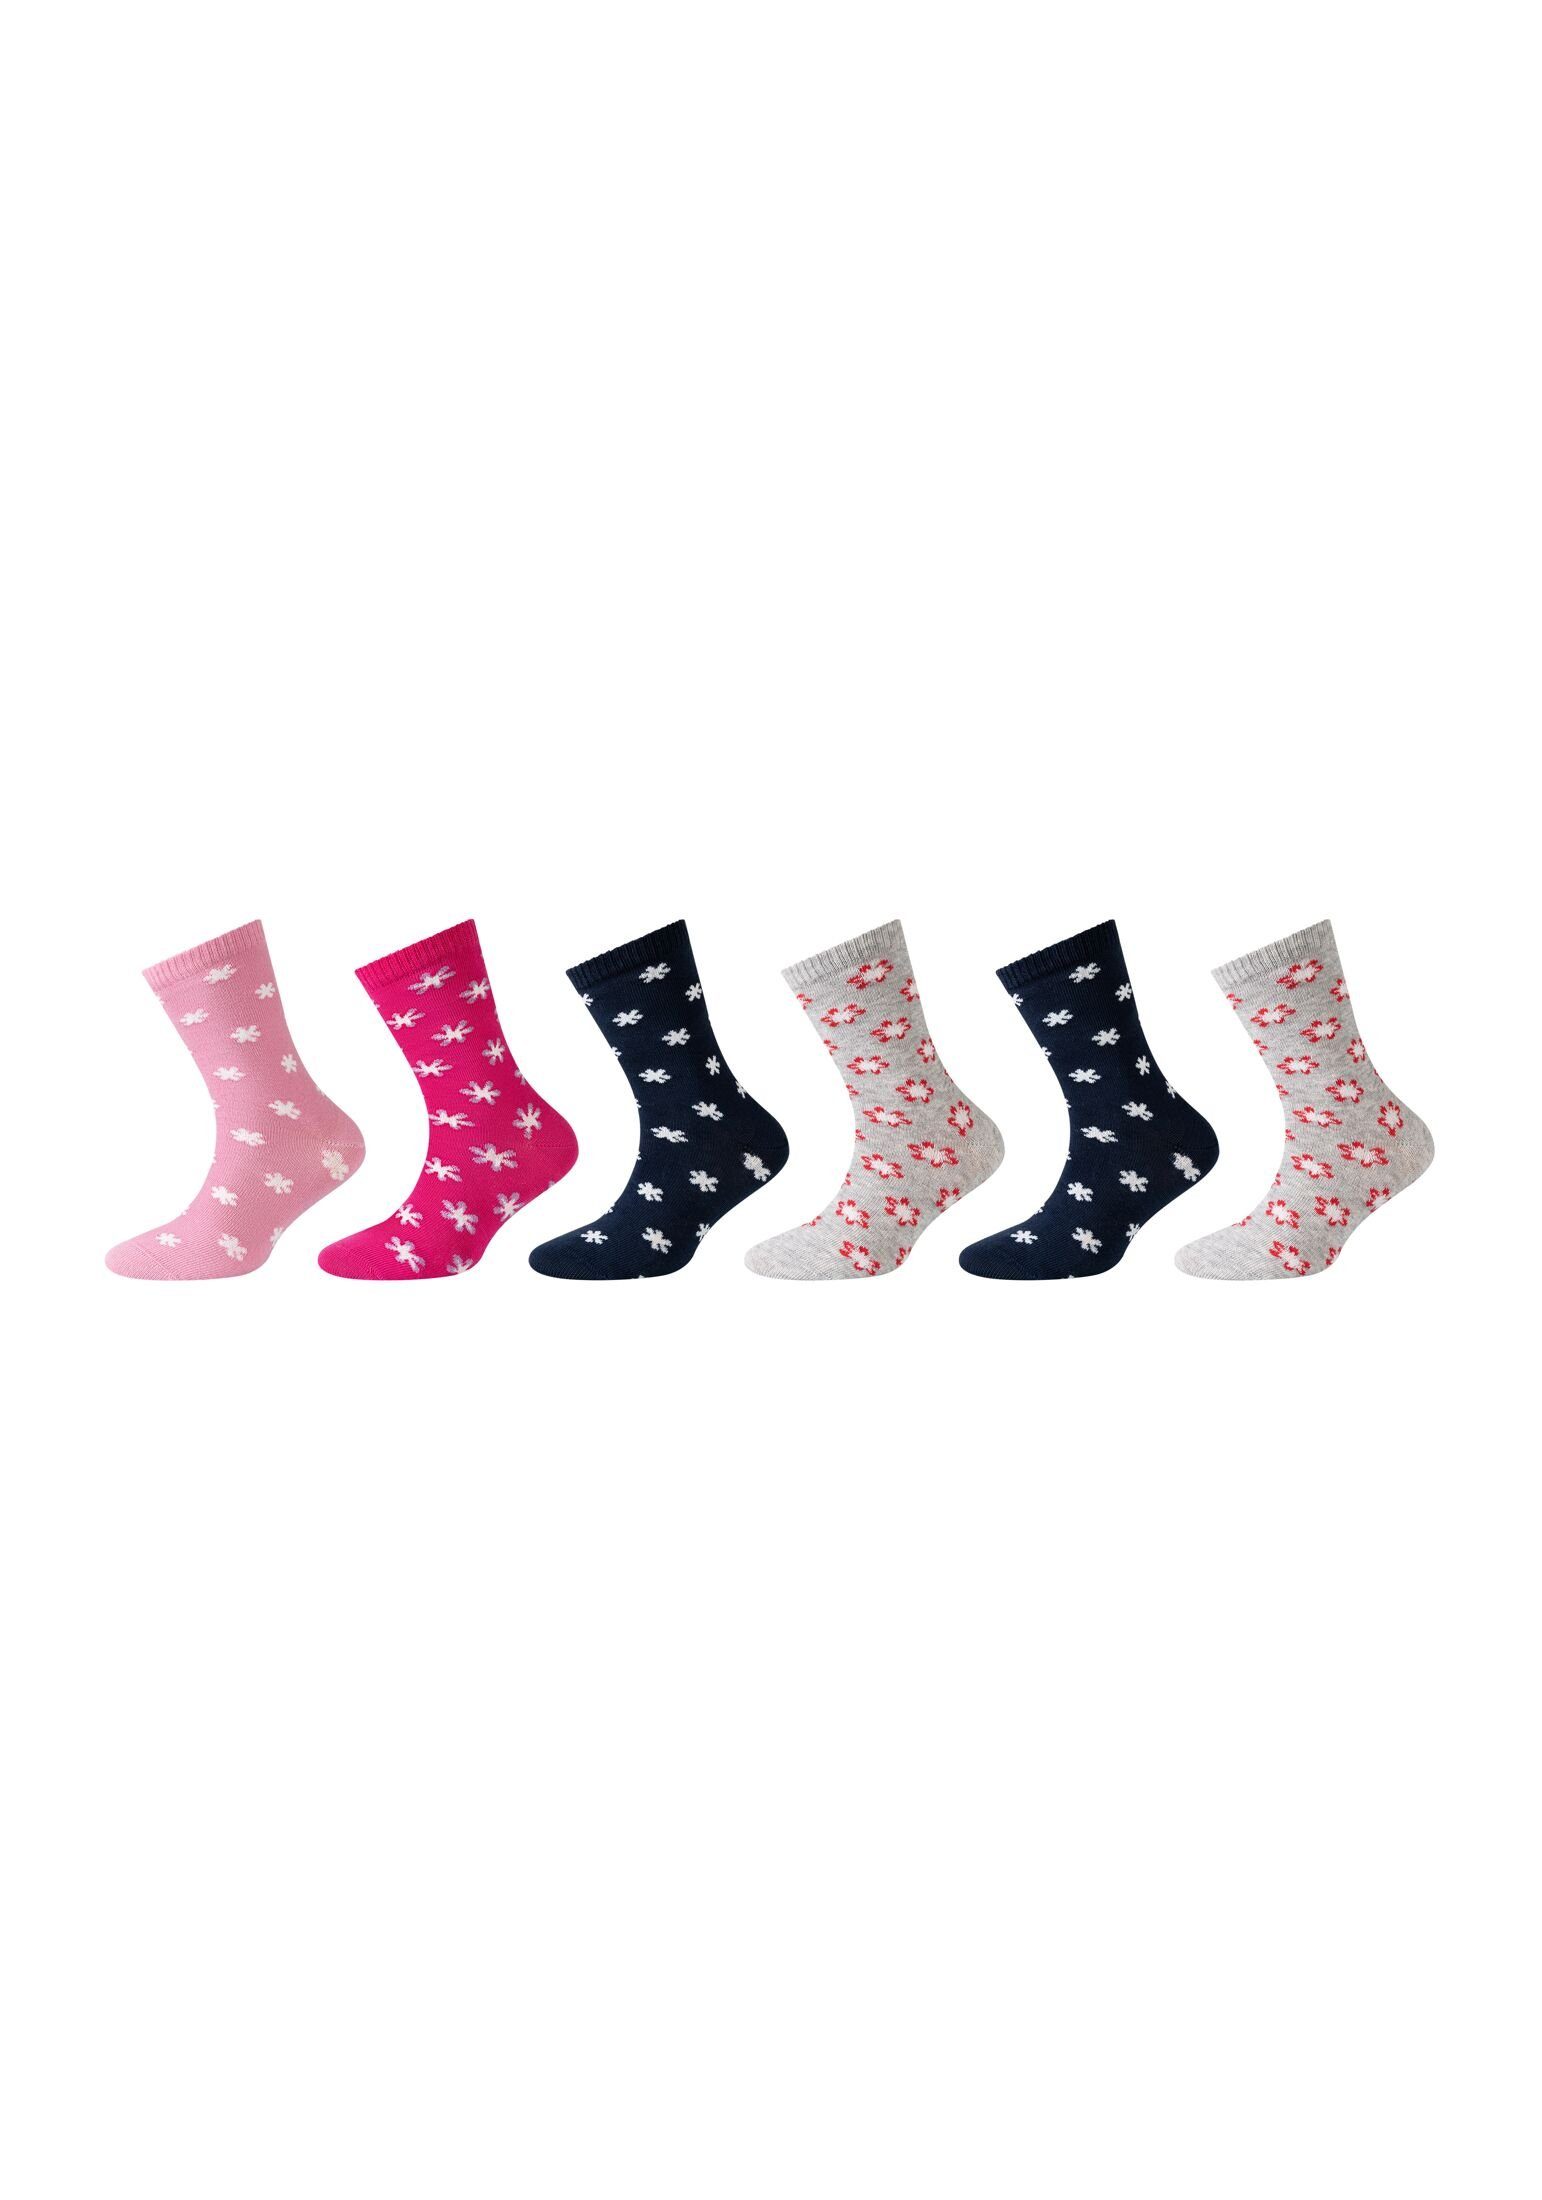 Camano Socken Socken paradise Pack 6er pink